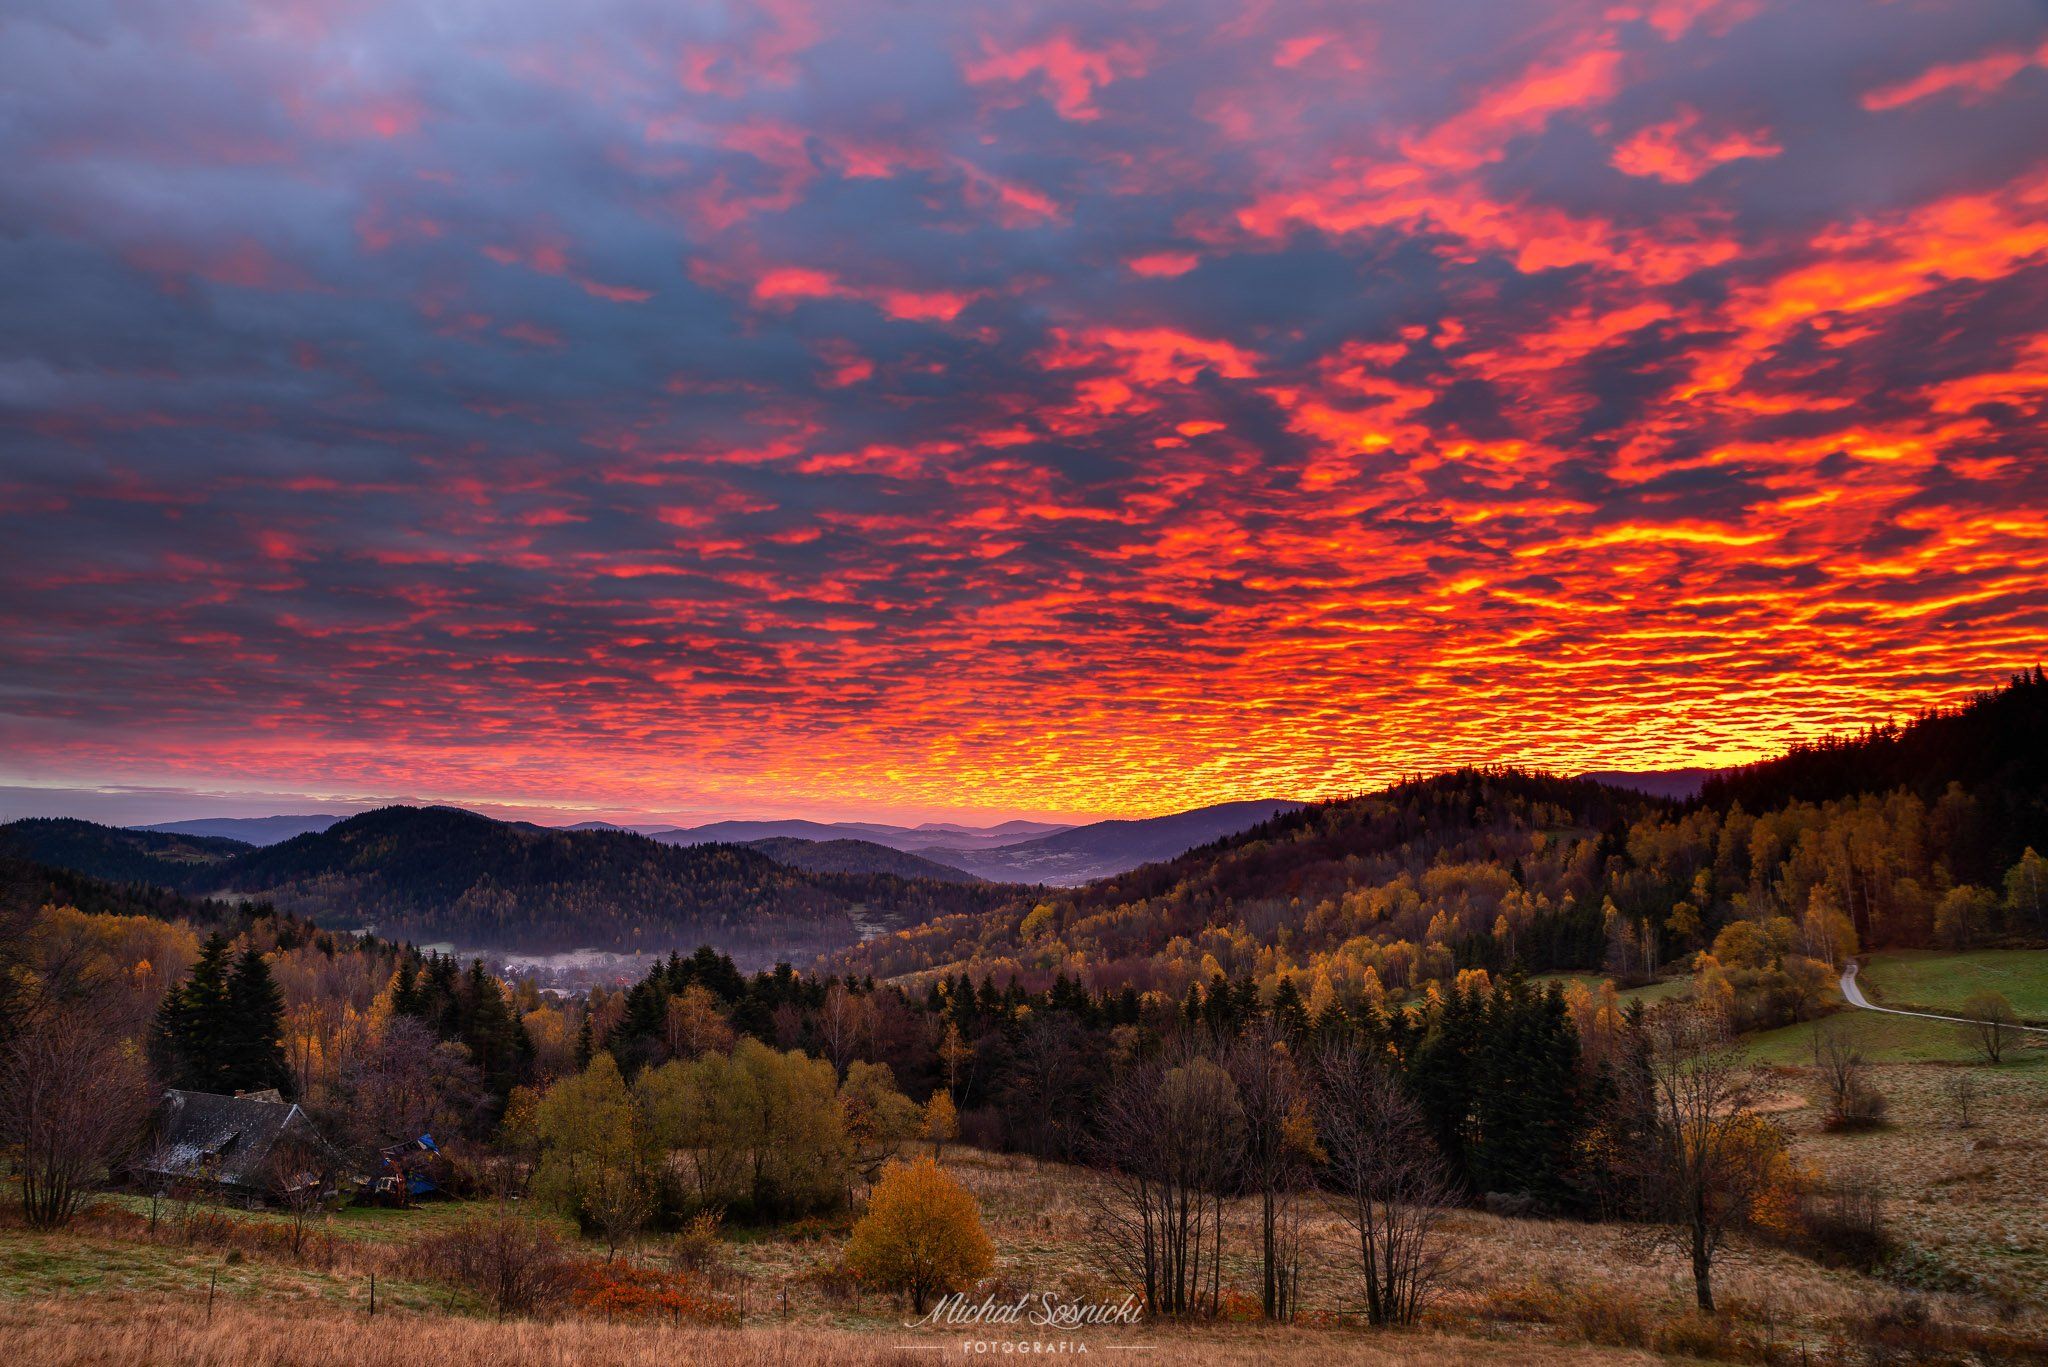 #poland #autumn#nature #landscape #awesome #amazing #pentax #benro #benq #sky #fire, Michał Sośnicki